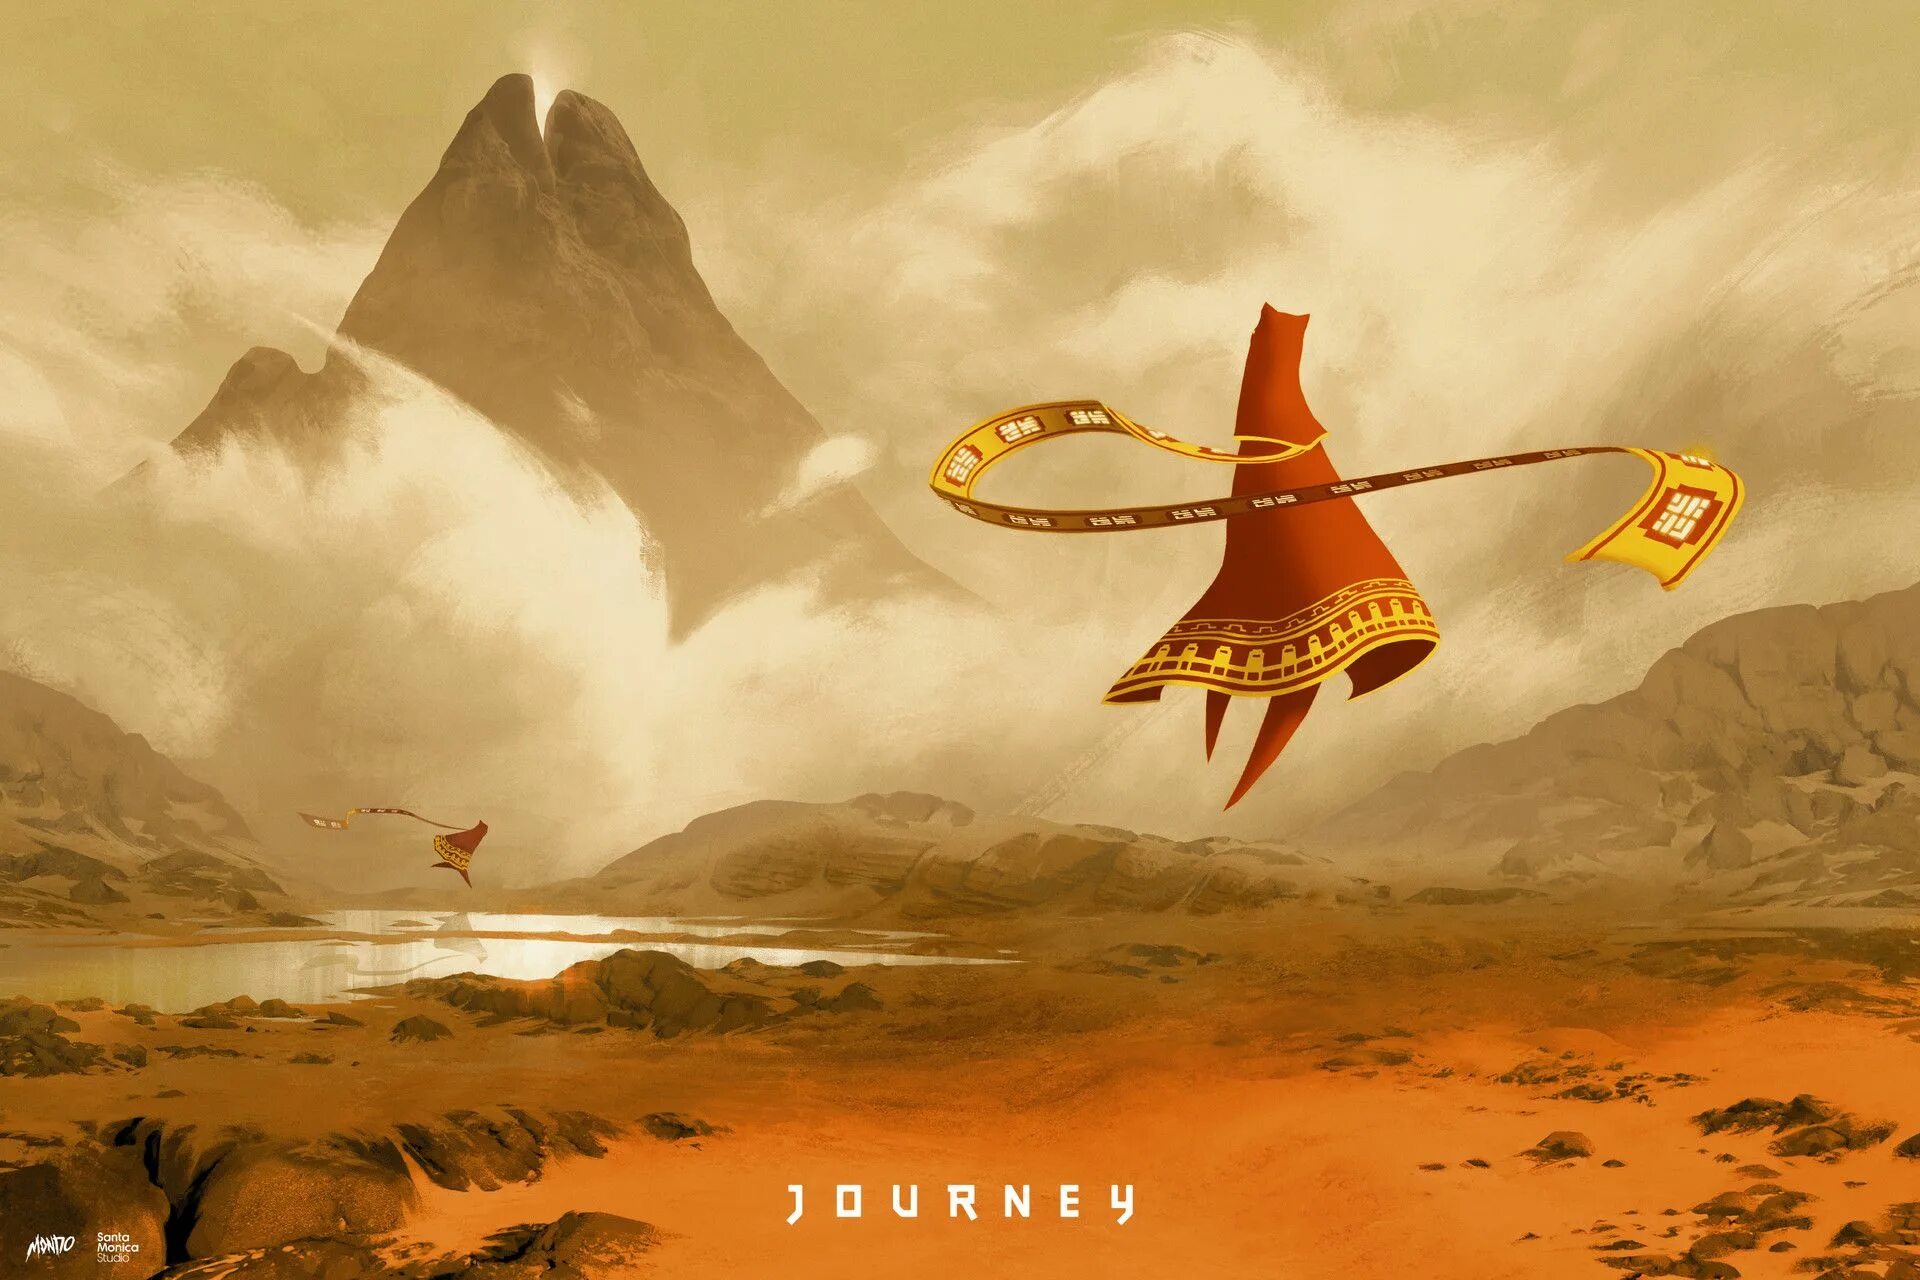 Journey (игра, 2012). Джорни путешествие игра. Tomislav Jagnjic. Journey концепт арт.